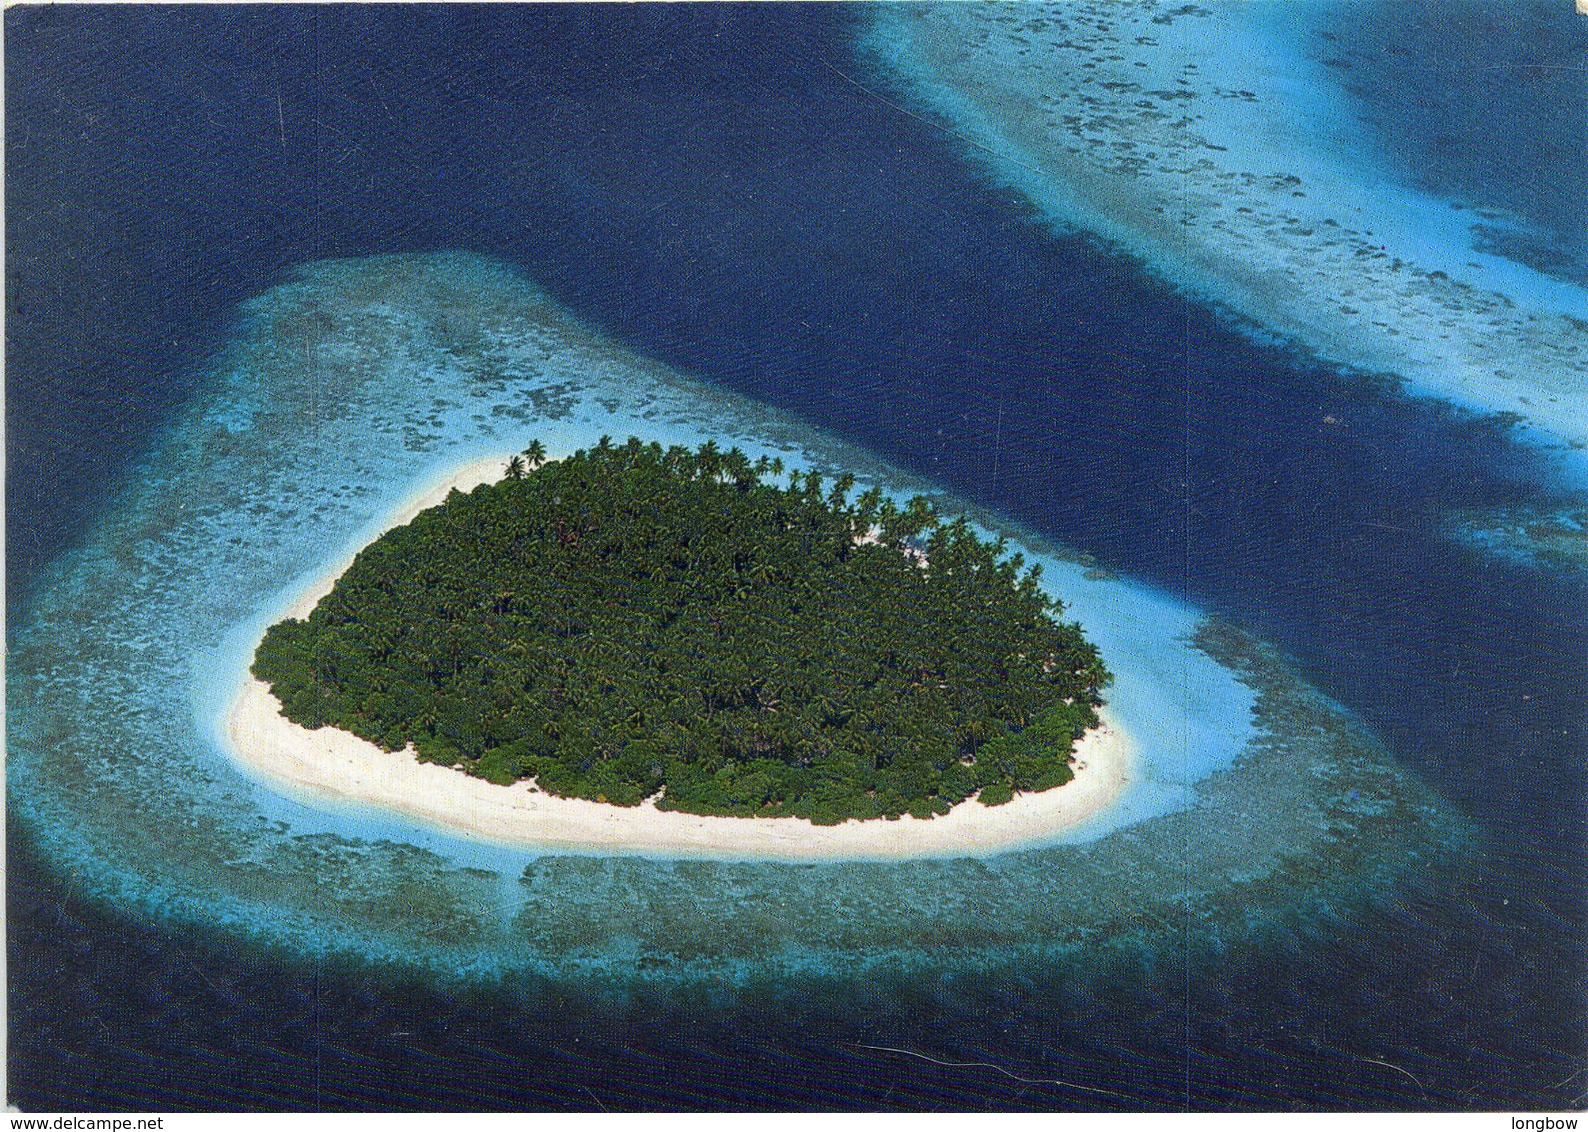 Maldives Islands - Maldives